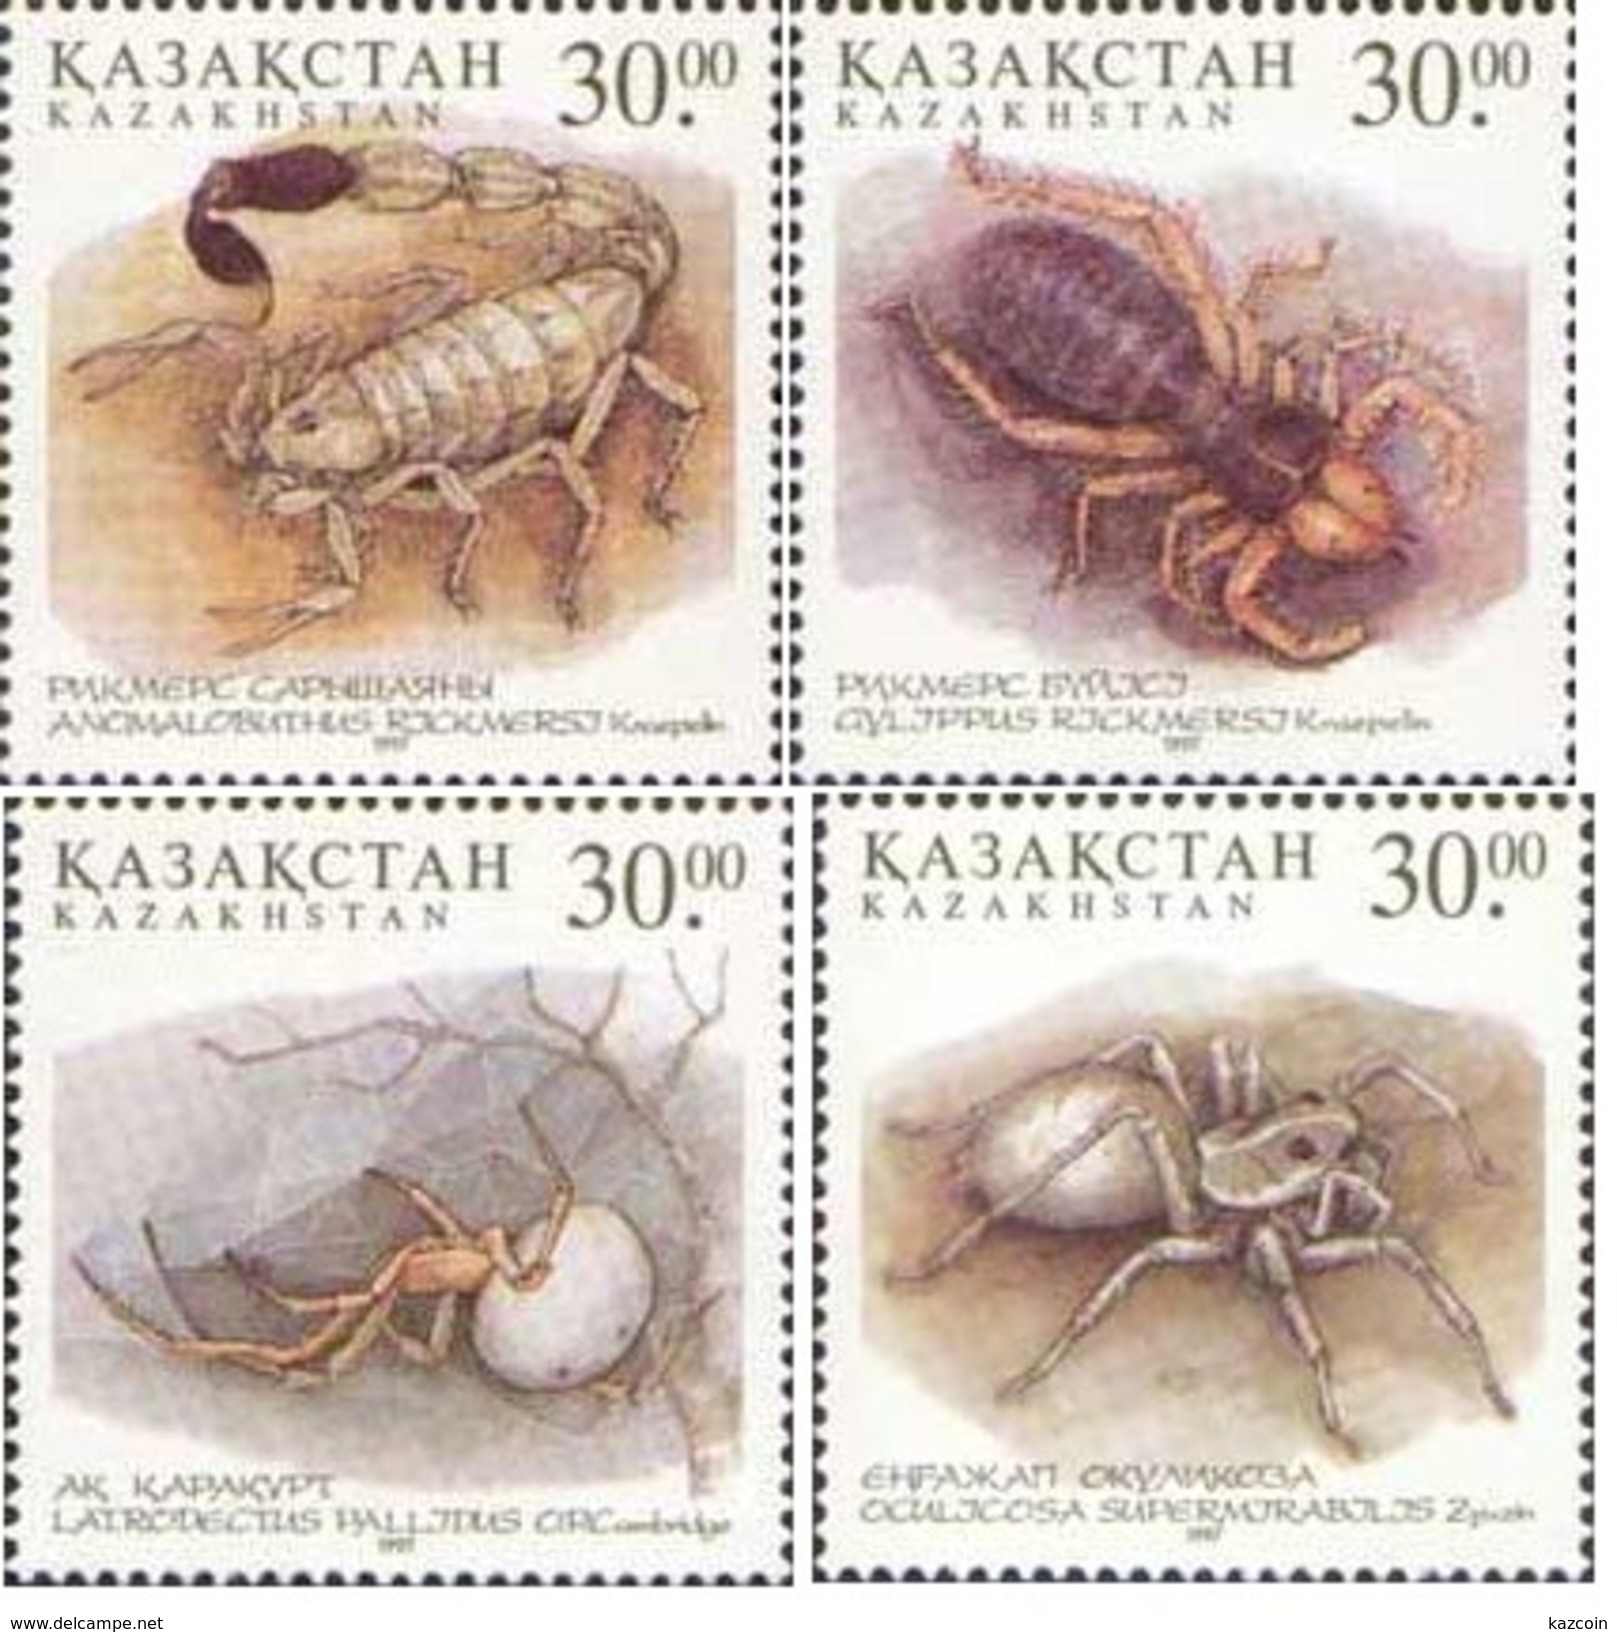 1997 Kazakhstan Kasachstan - Venomous Insects - Spiders, Scorpion - Spiders